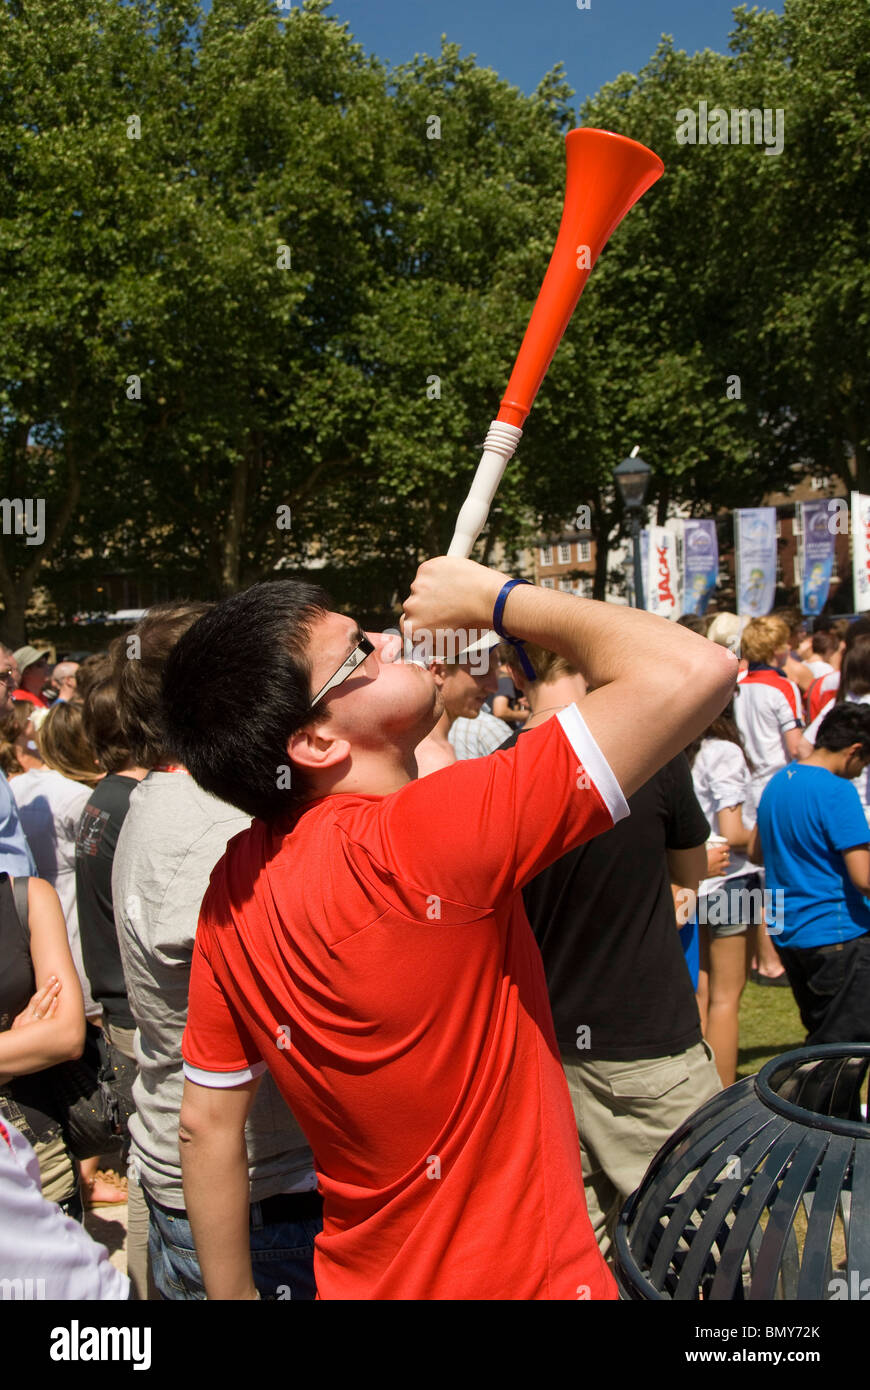 Football fan blowing a vuvuzela during World Cup, England, UK Stock Photo